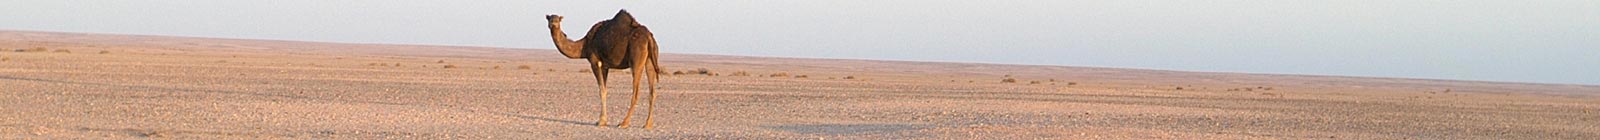 Camel in evening Western Sahara Banner